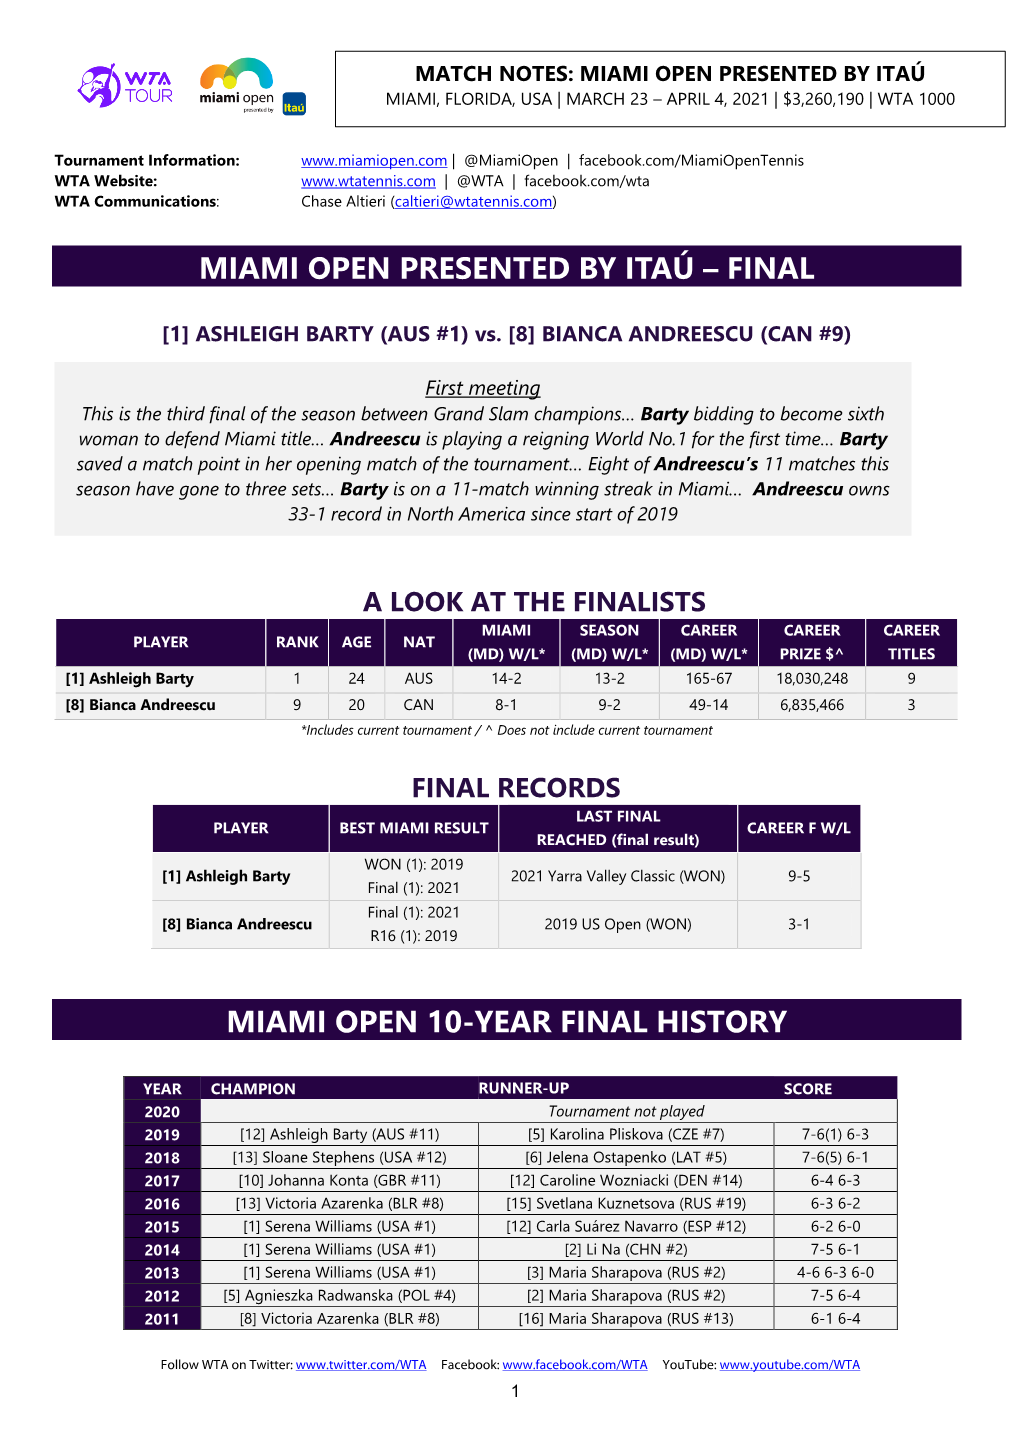 Miami Open Presented by Itaú Miami, Florida, Usa | March 23 – April 4, 2021 | $3,260,190 | Wta 1000